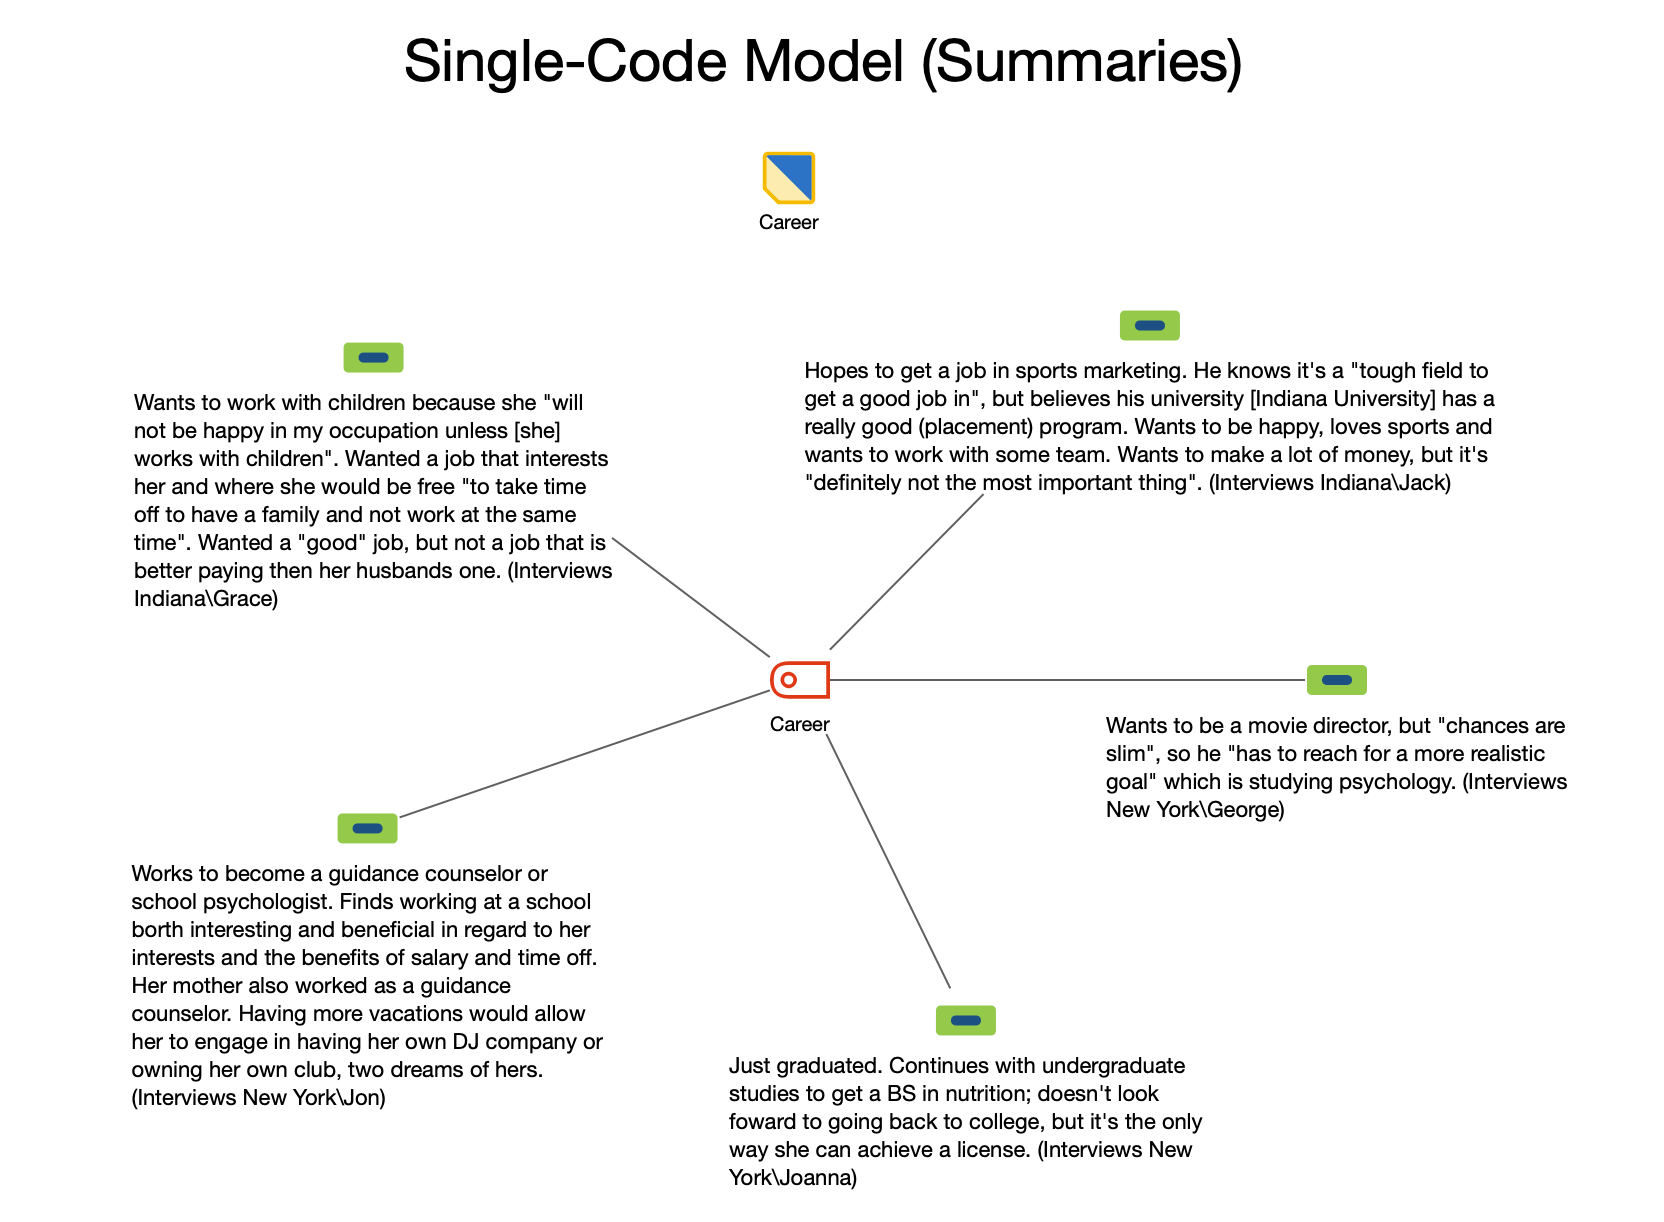 Example of a Single-Code Model (Summaries)